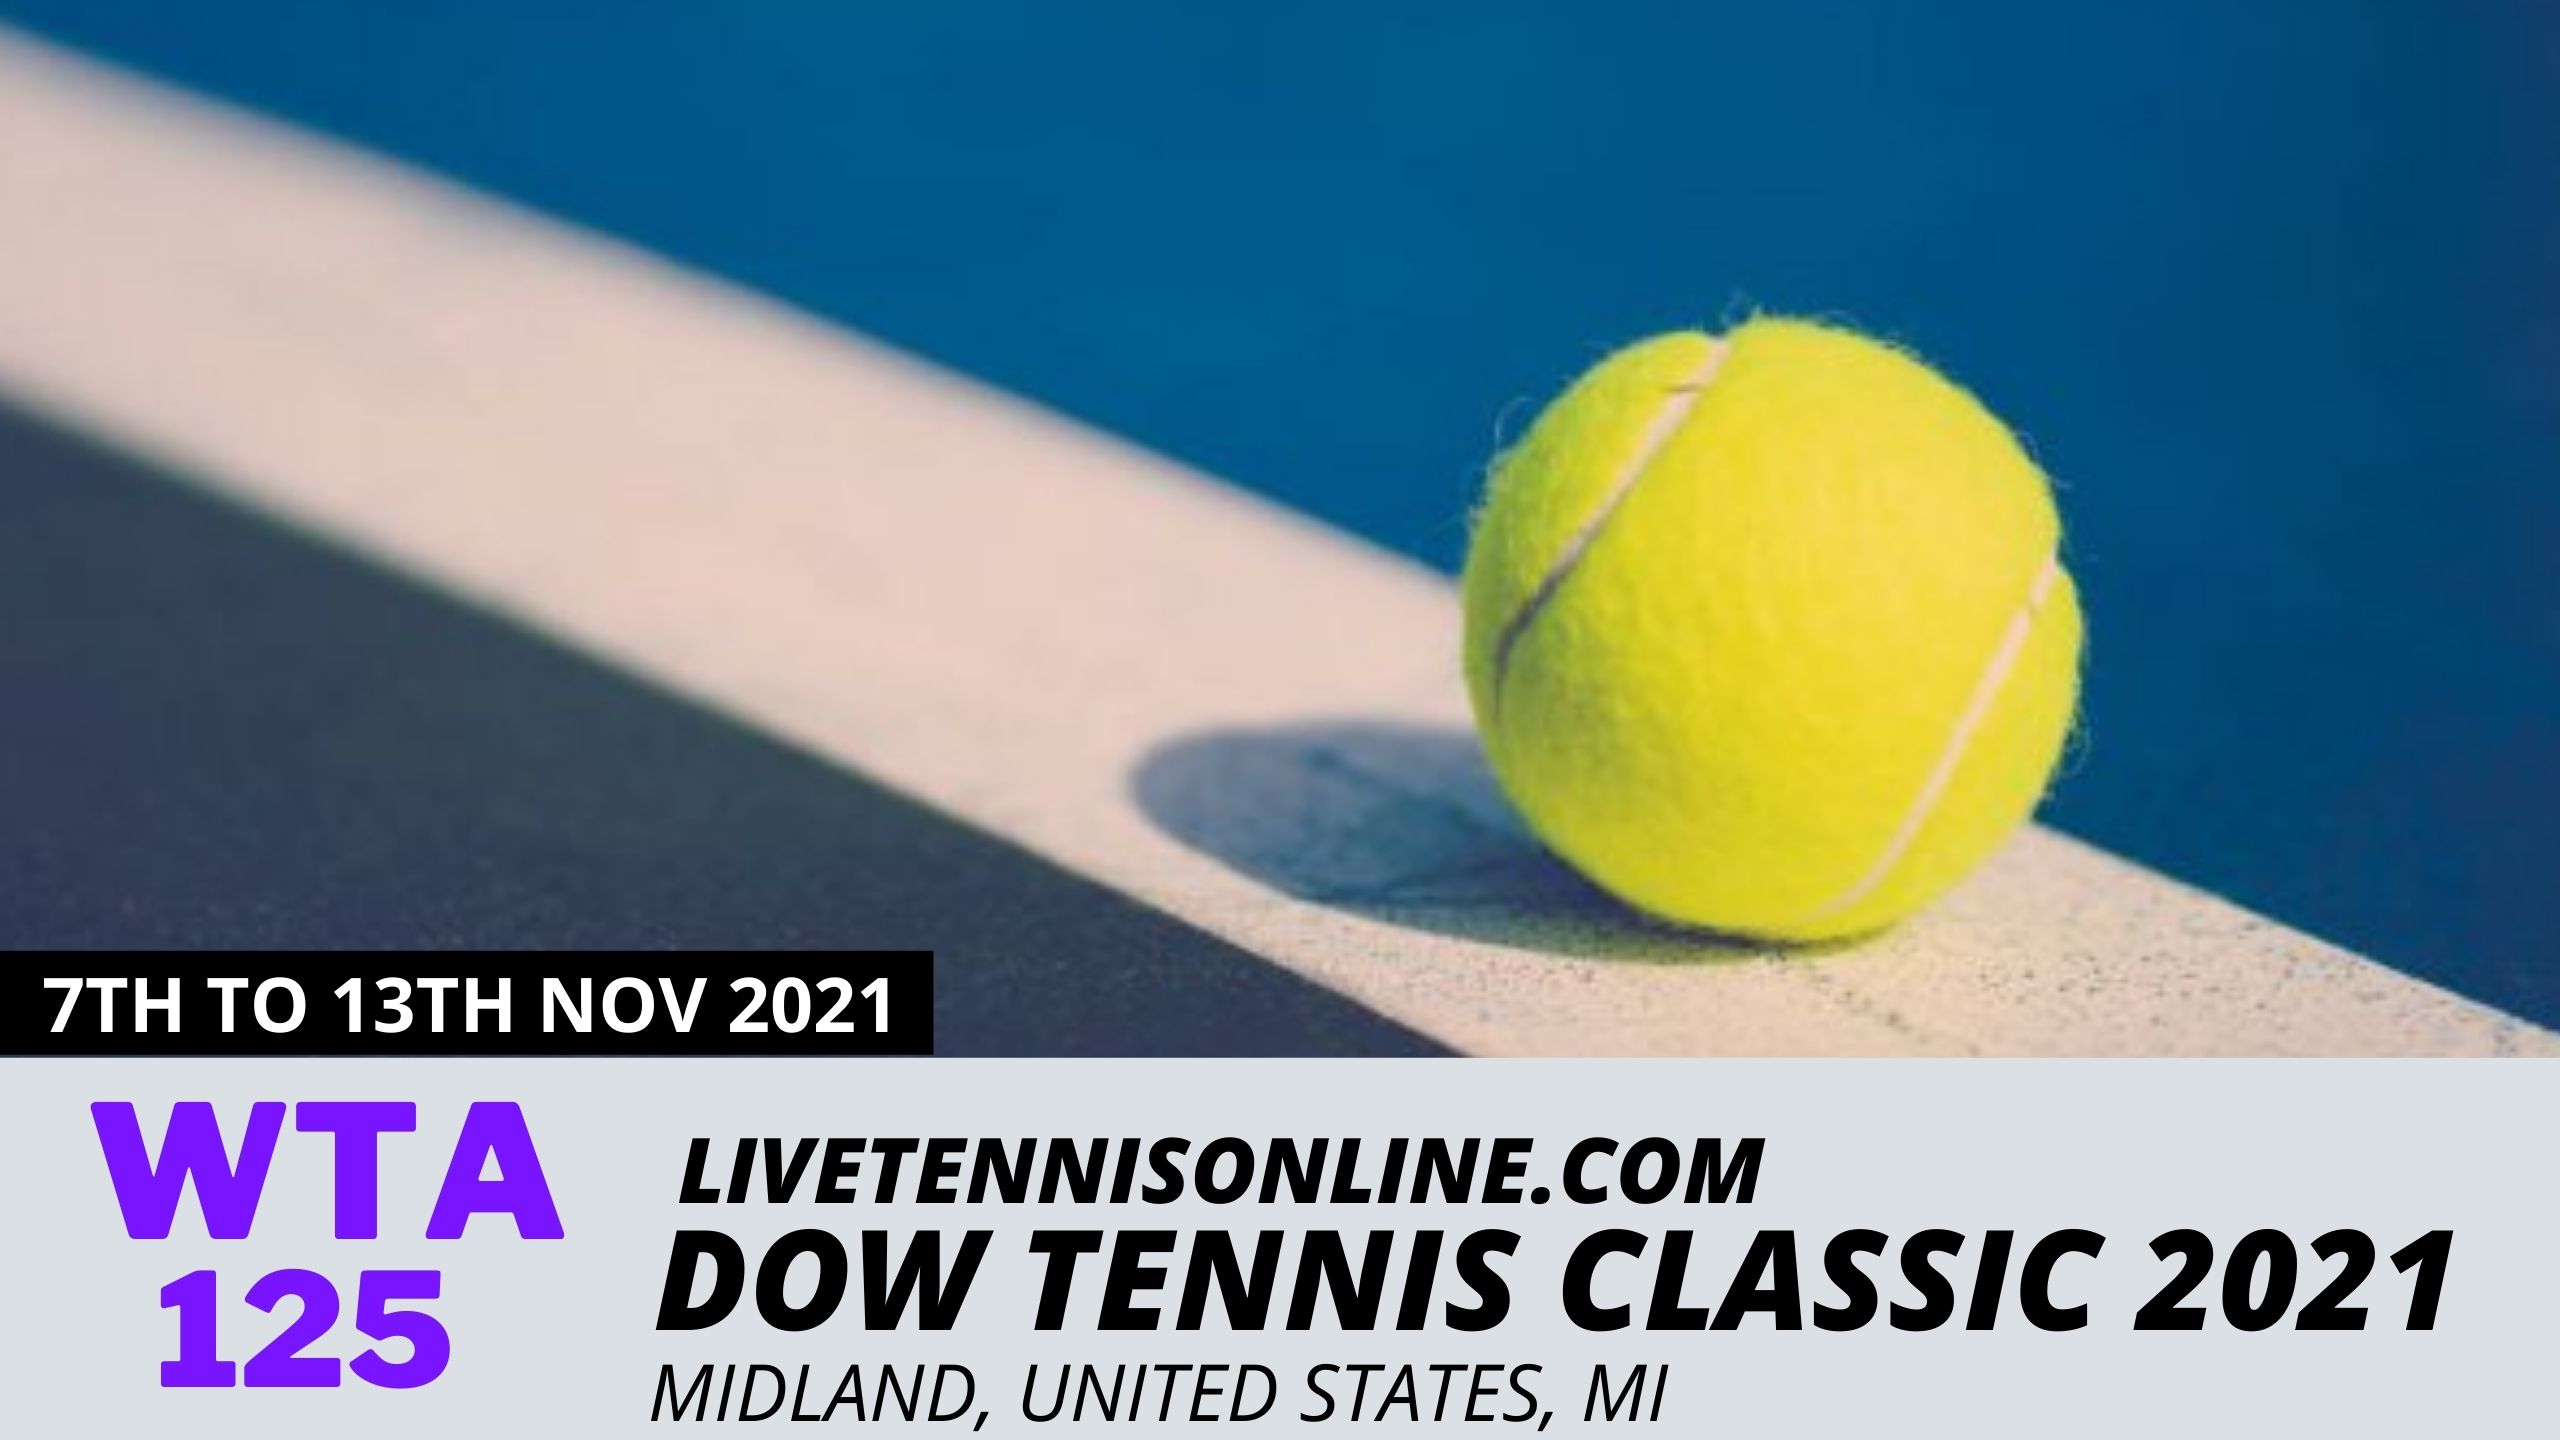 dow-tennis-classic-live-stream